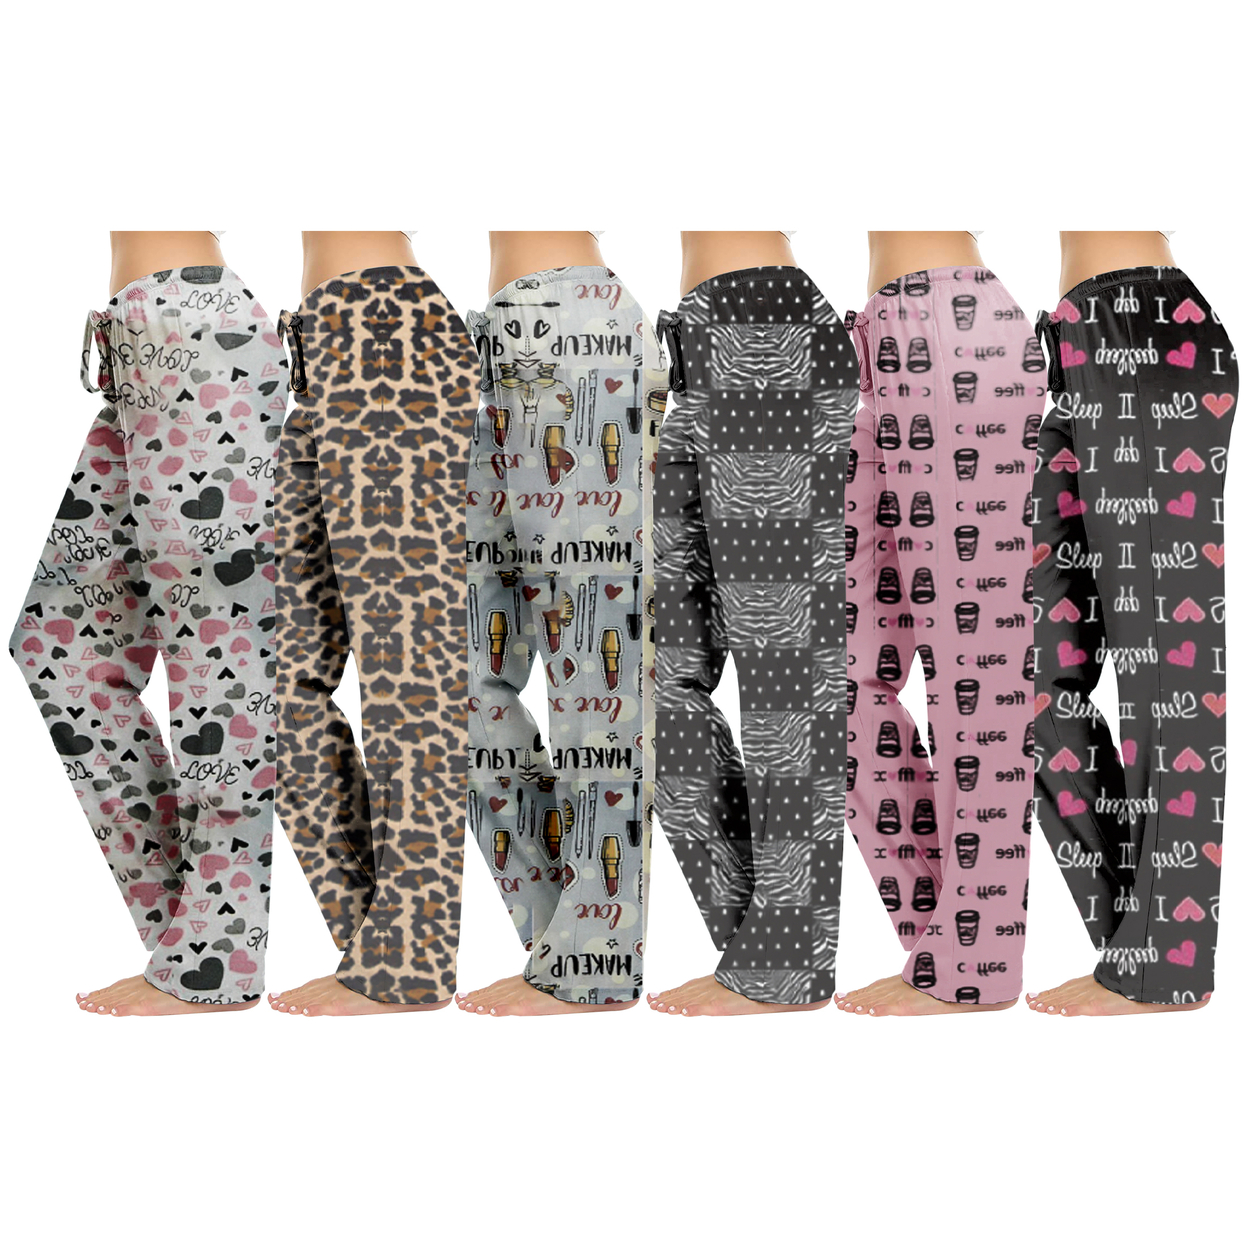 2-Pack: Women's Casual Fun Printed Lightweight Lounge Terry Knit Pajama Bottom Pants - X-large, Animal